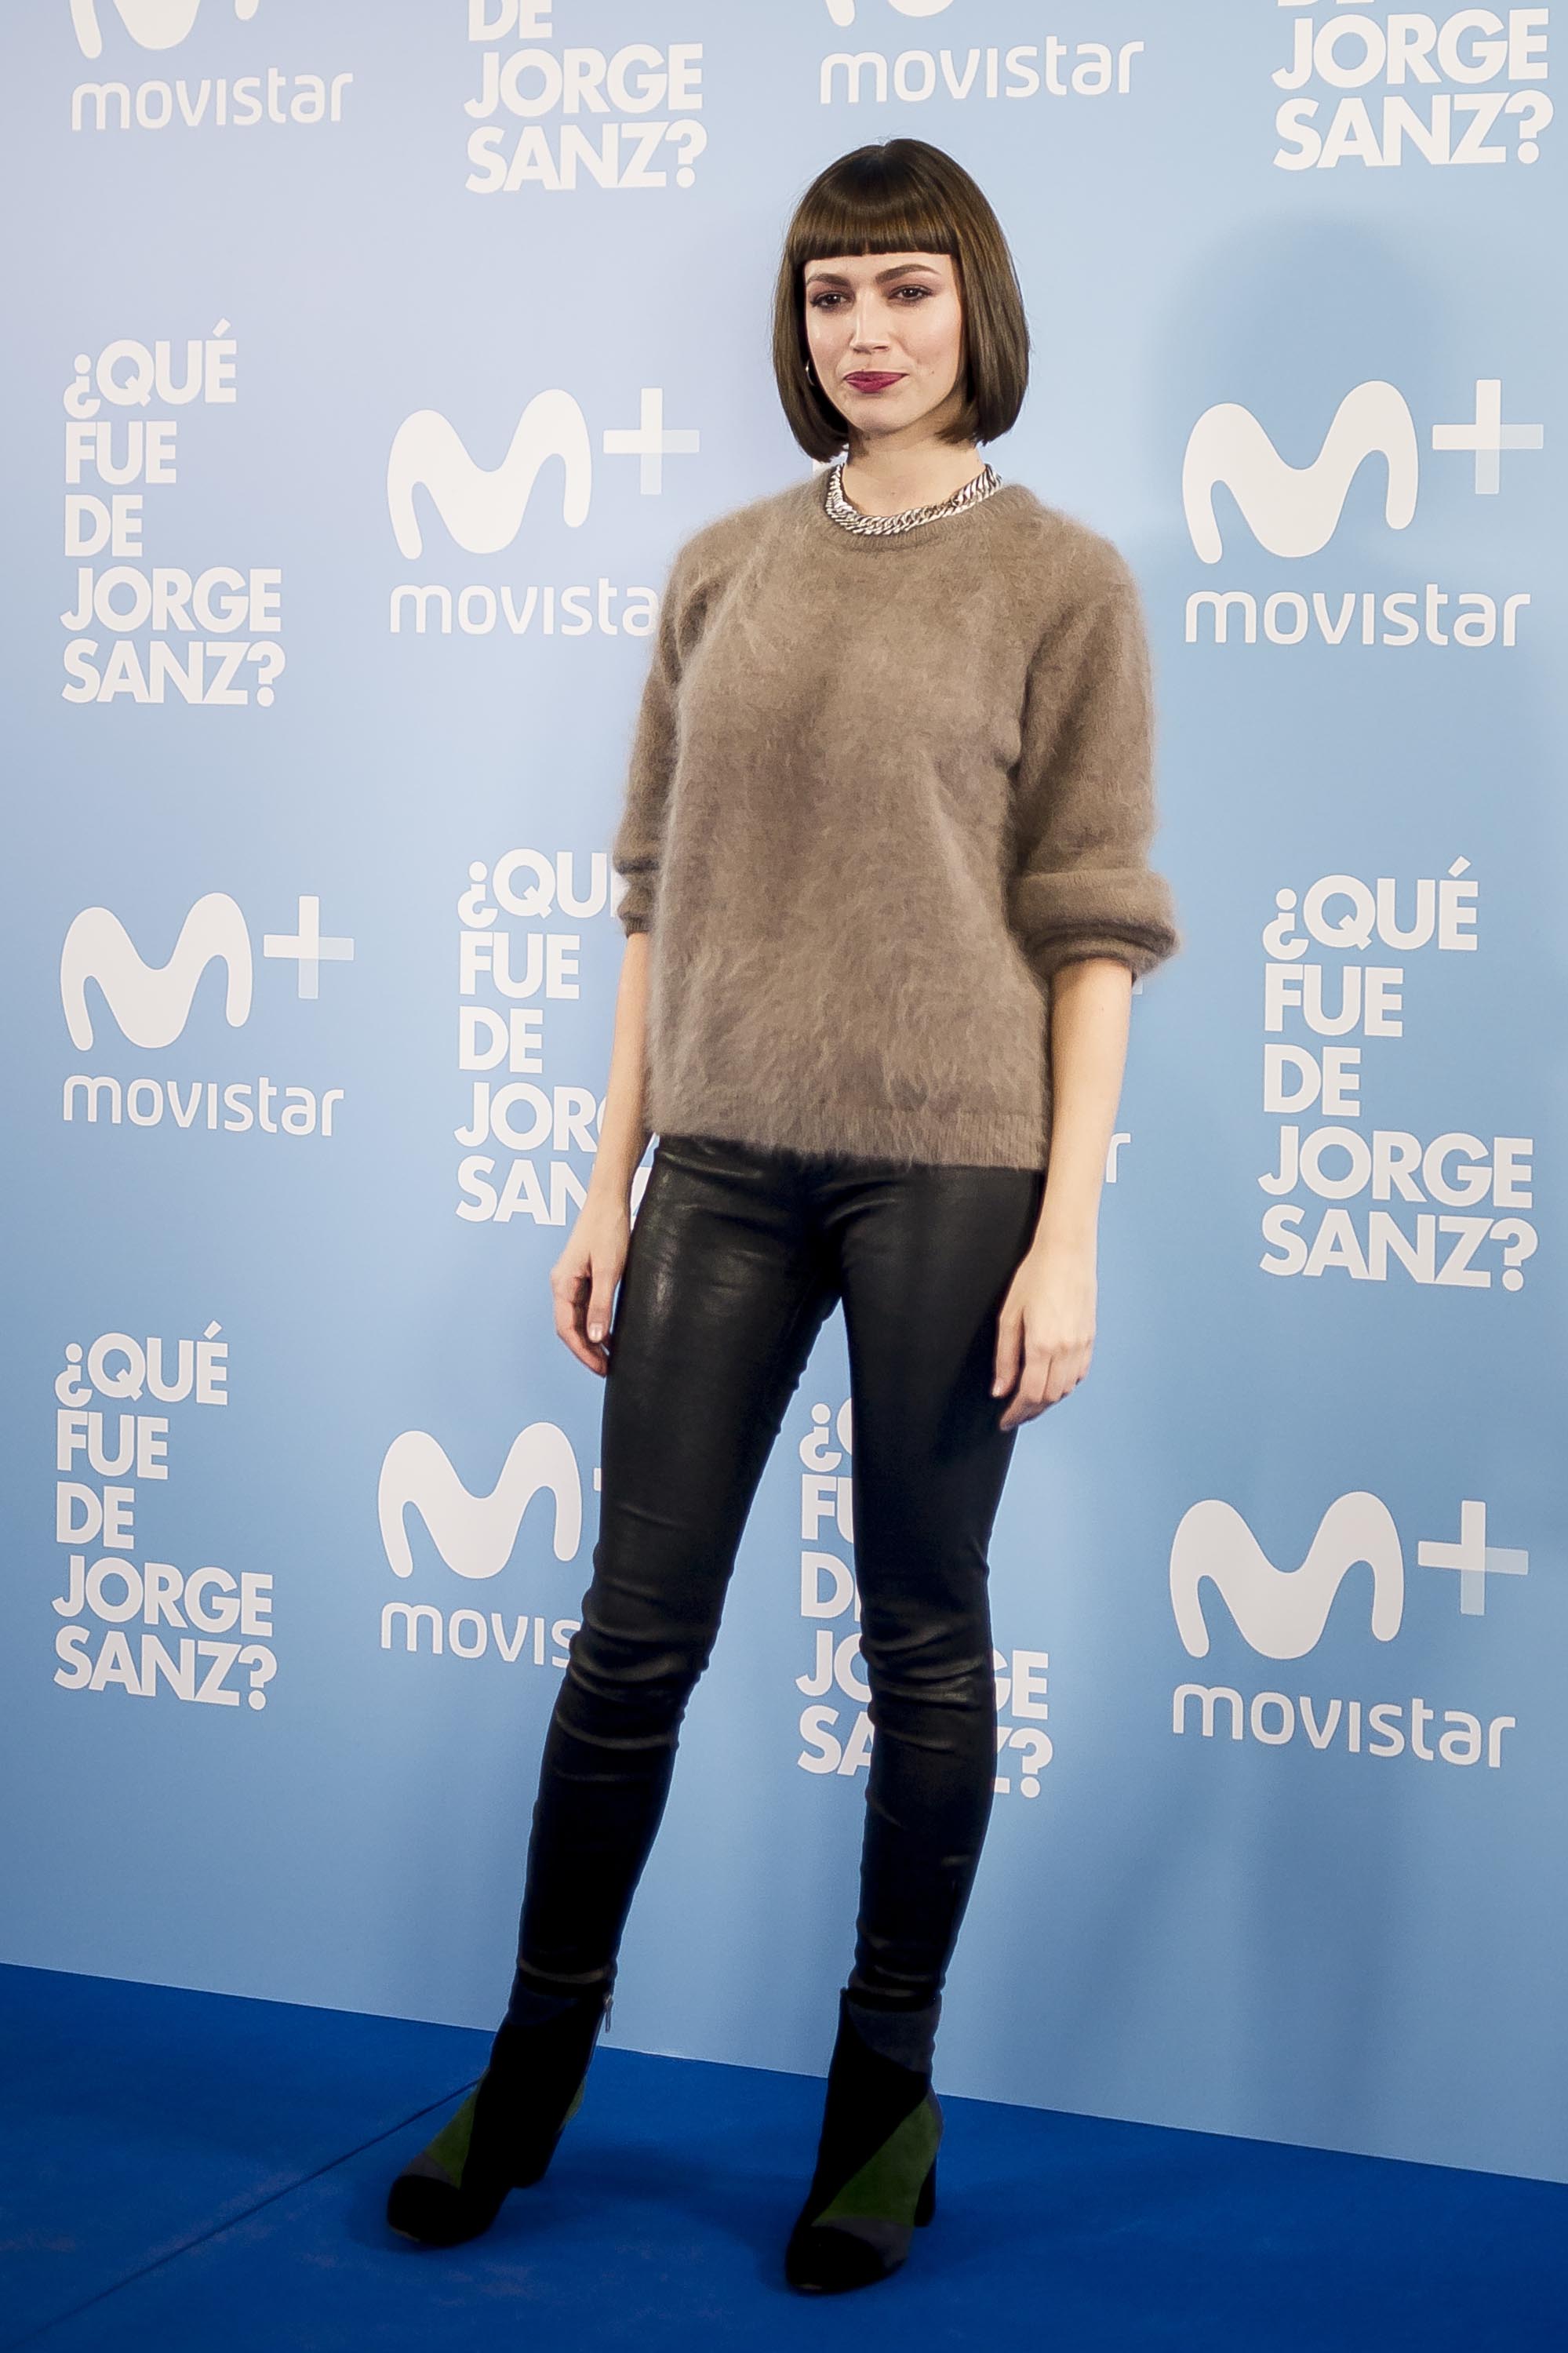 Ursula Corbero during Que fue de Jorge Sanz Madrid Premiere